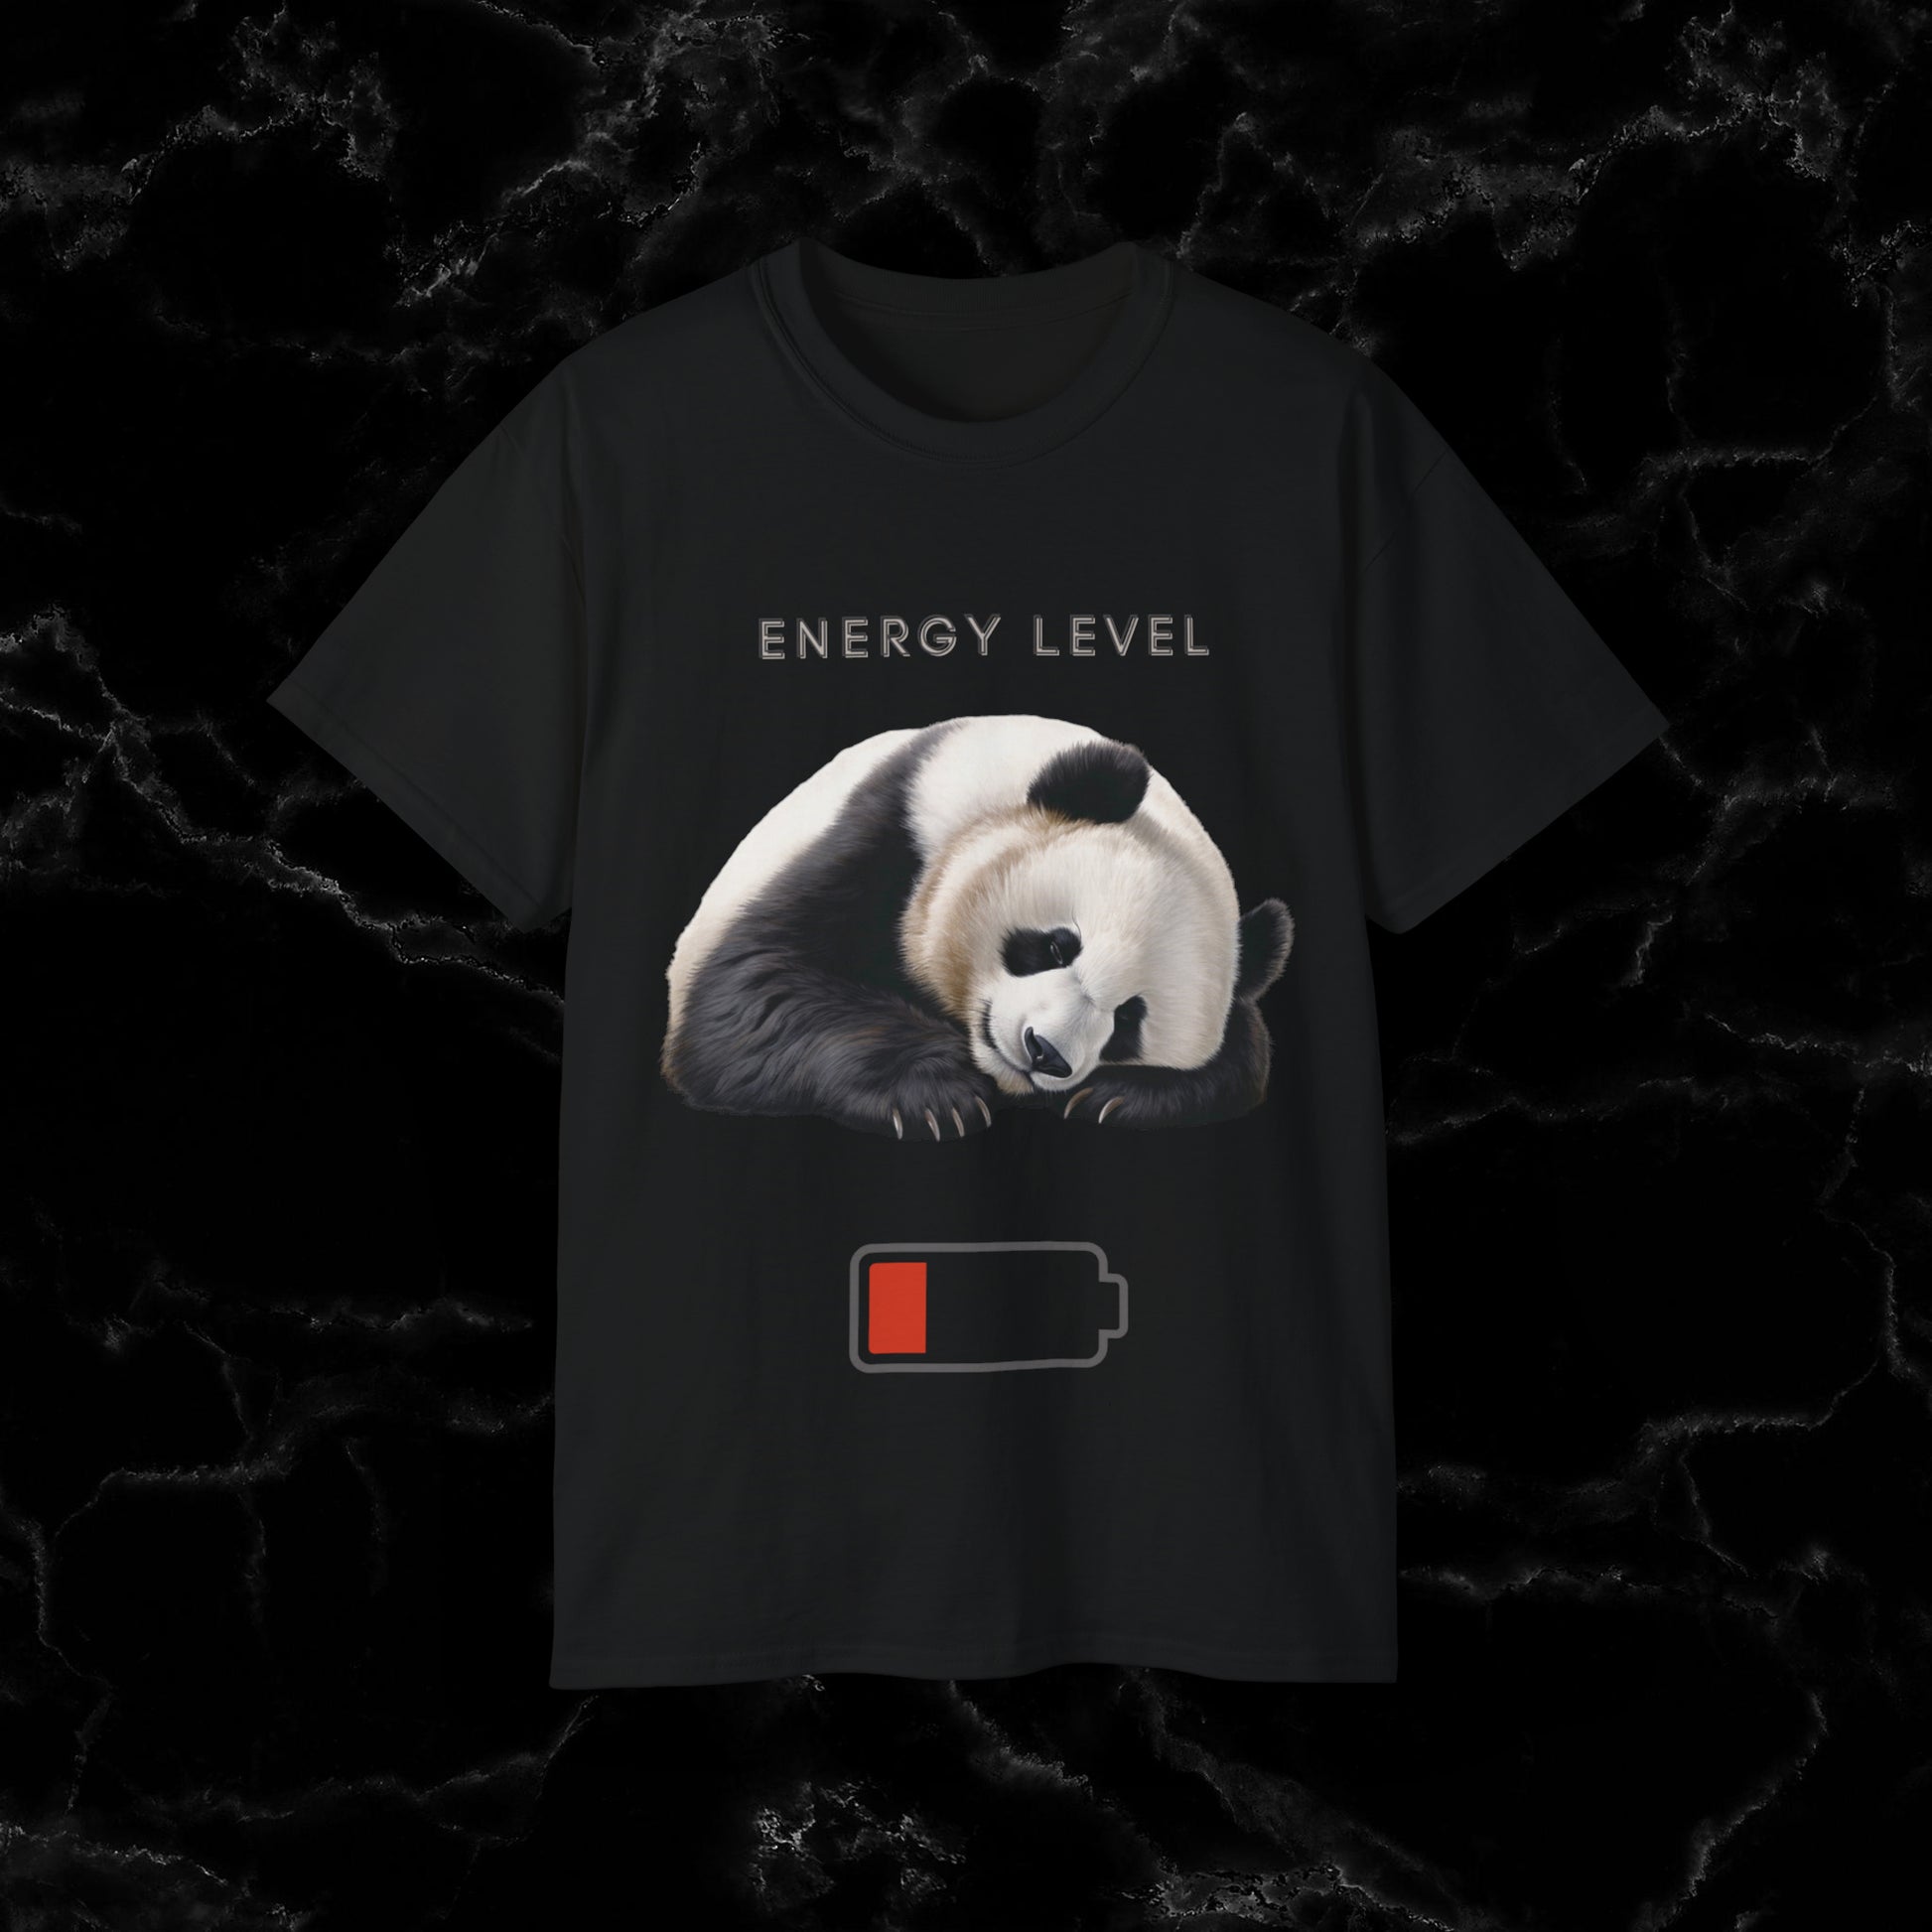 Nap Time Panda Unisex Funny Tee - Hilarious Panda Nap Design - Energy Level T-Shirt Black S 